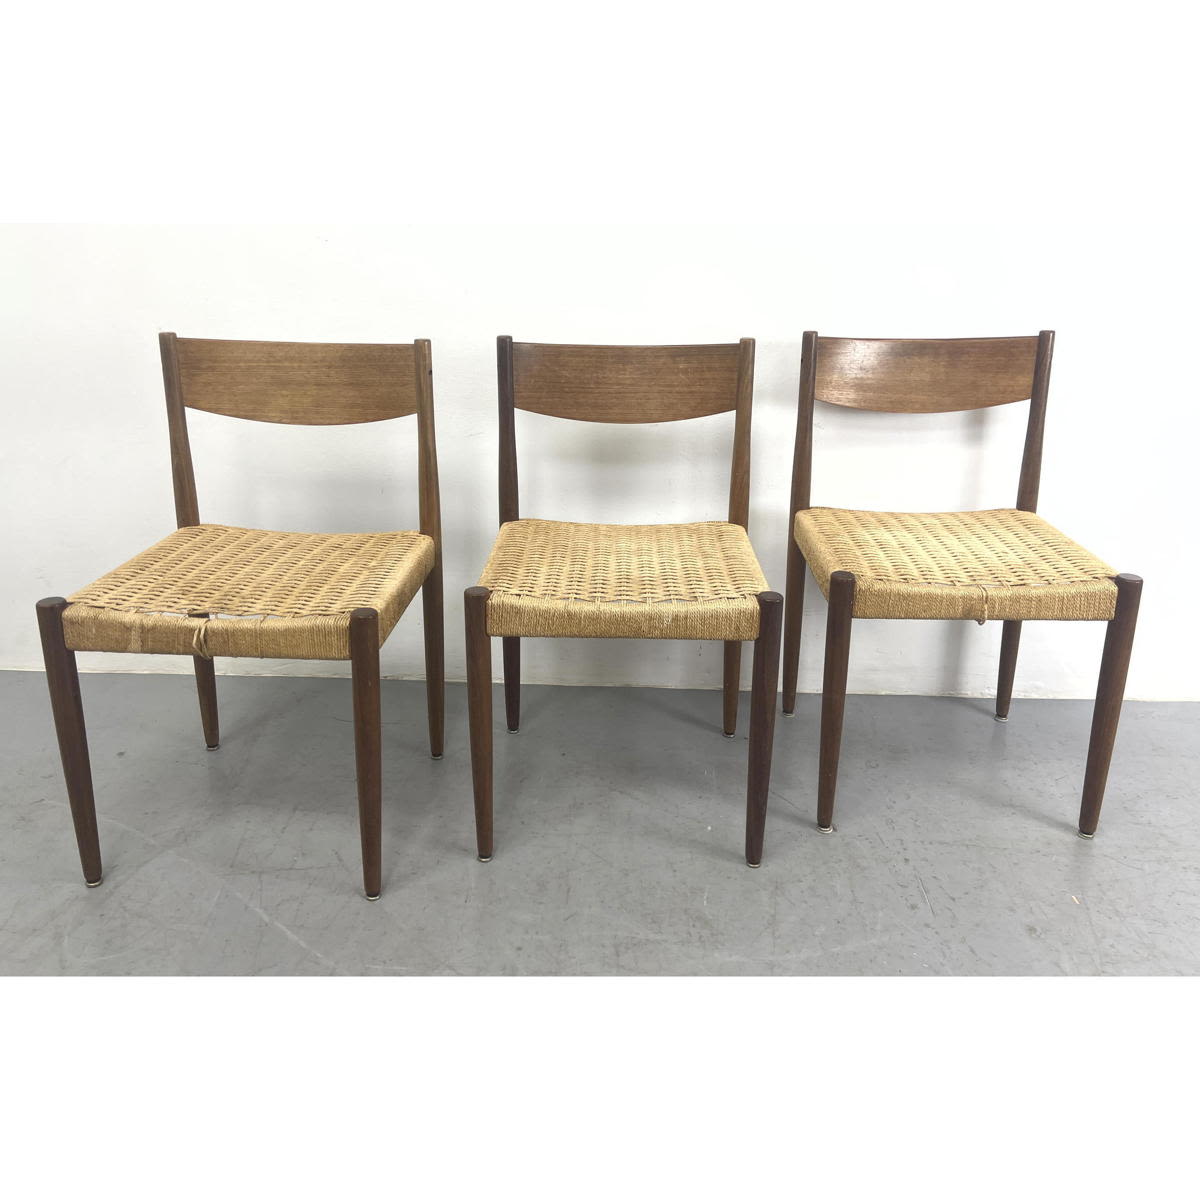 3pc Danish Modern Teak Dining Chairs  3003d0